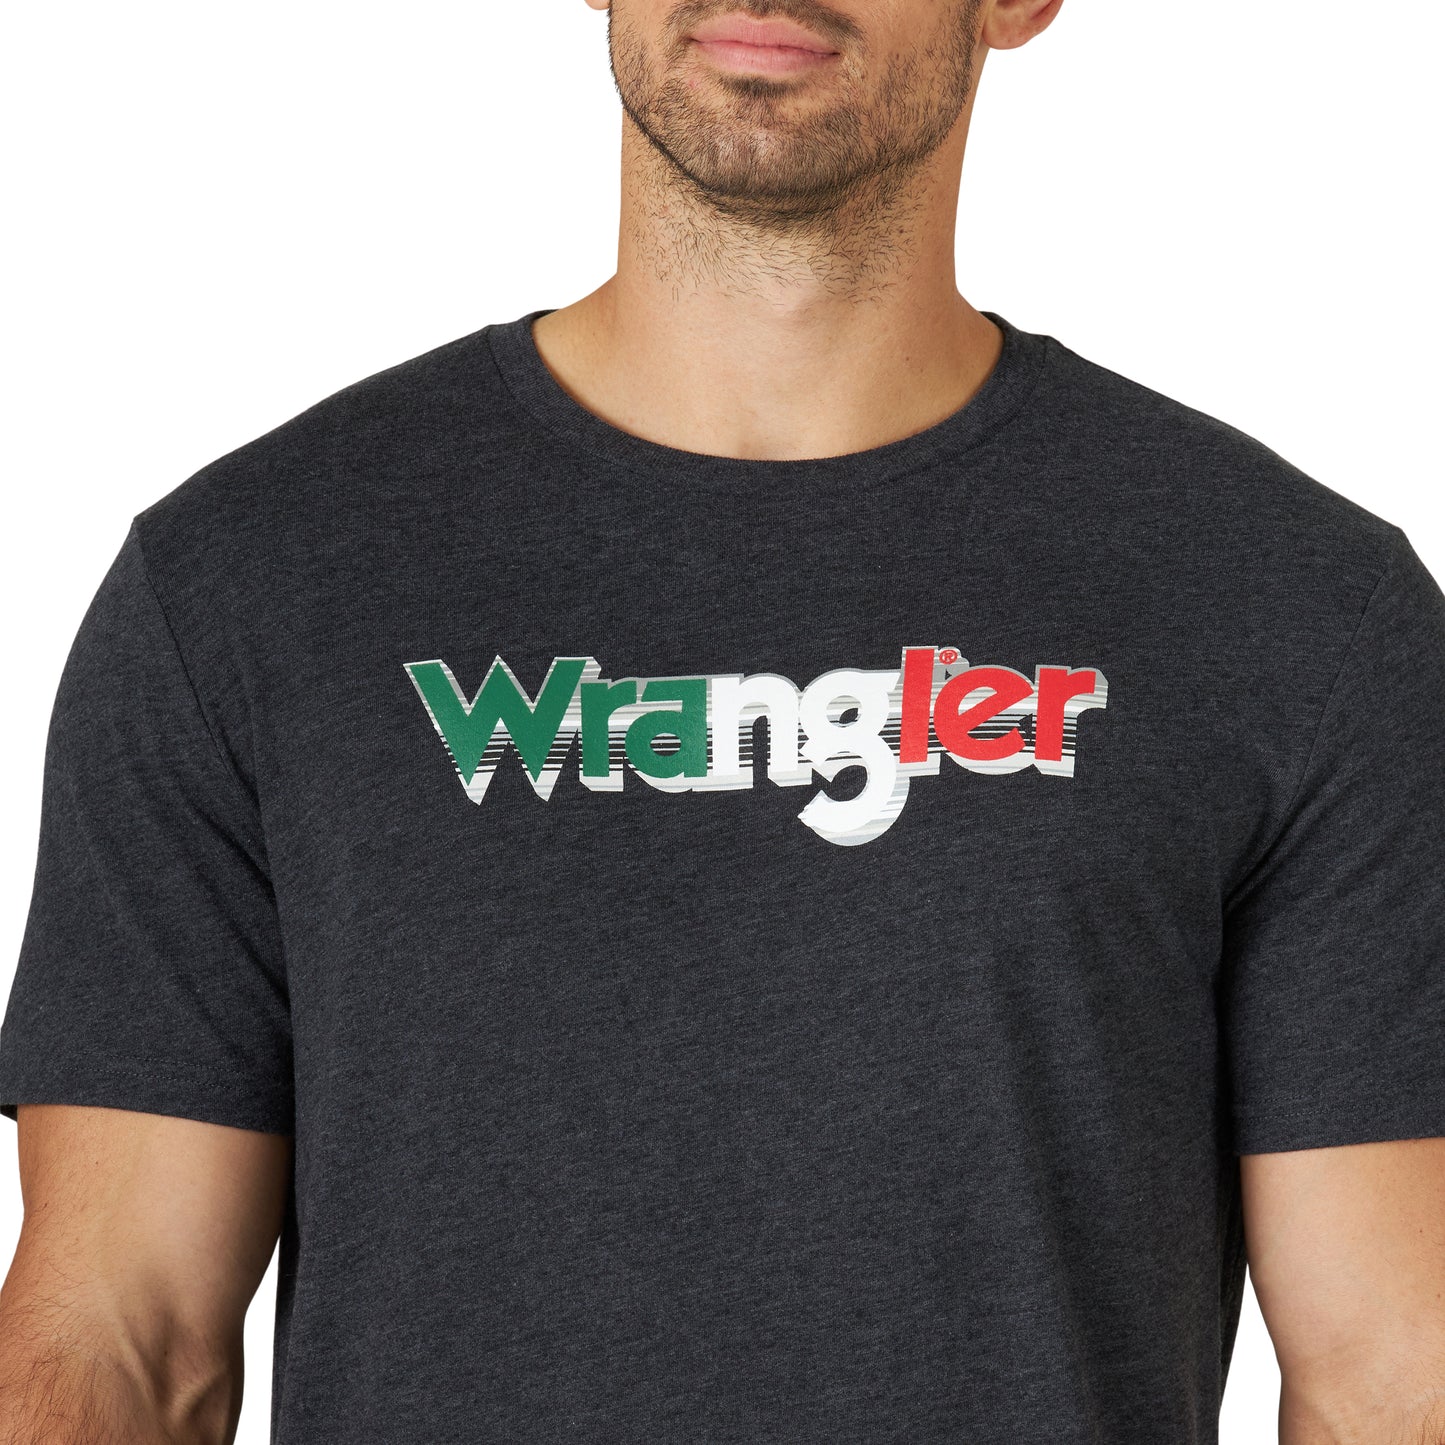 Wrangler Mexico Logo T-Shirt